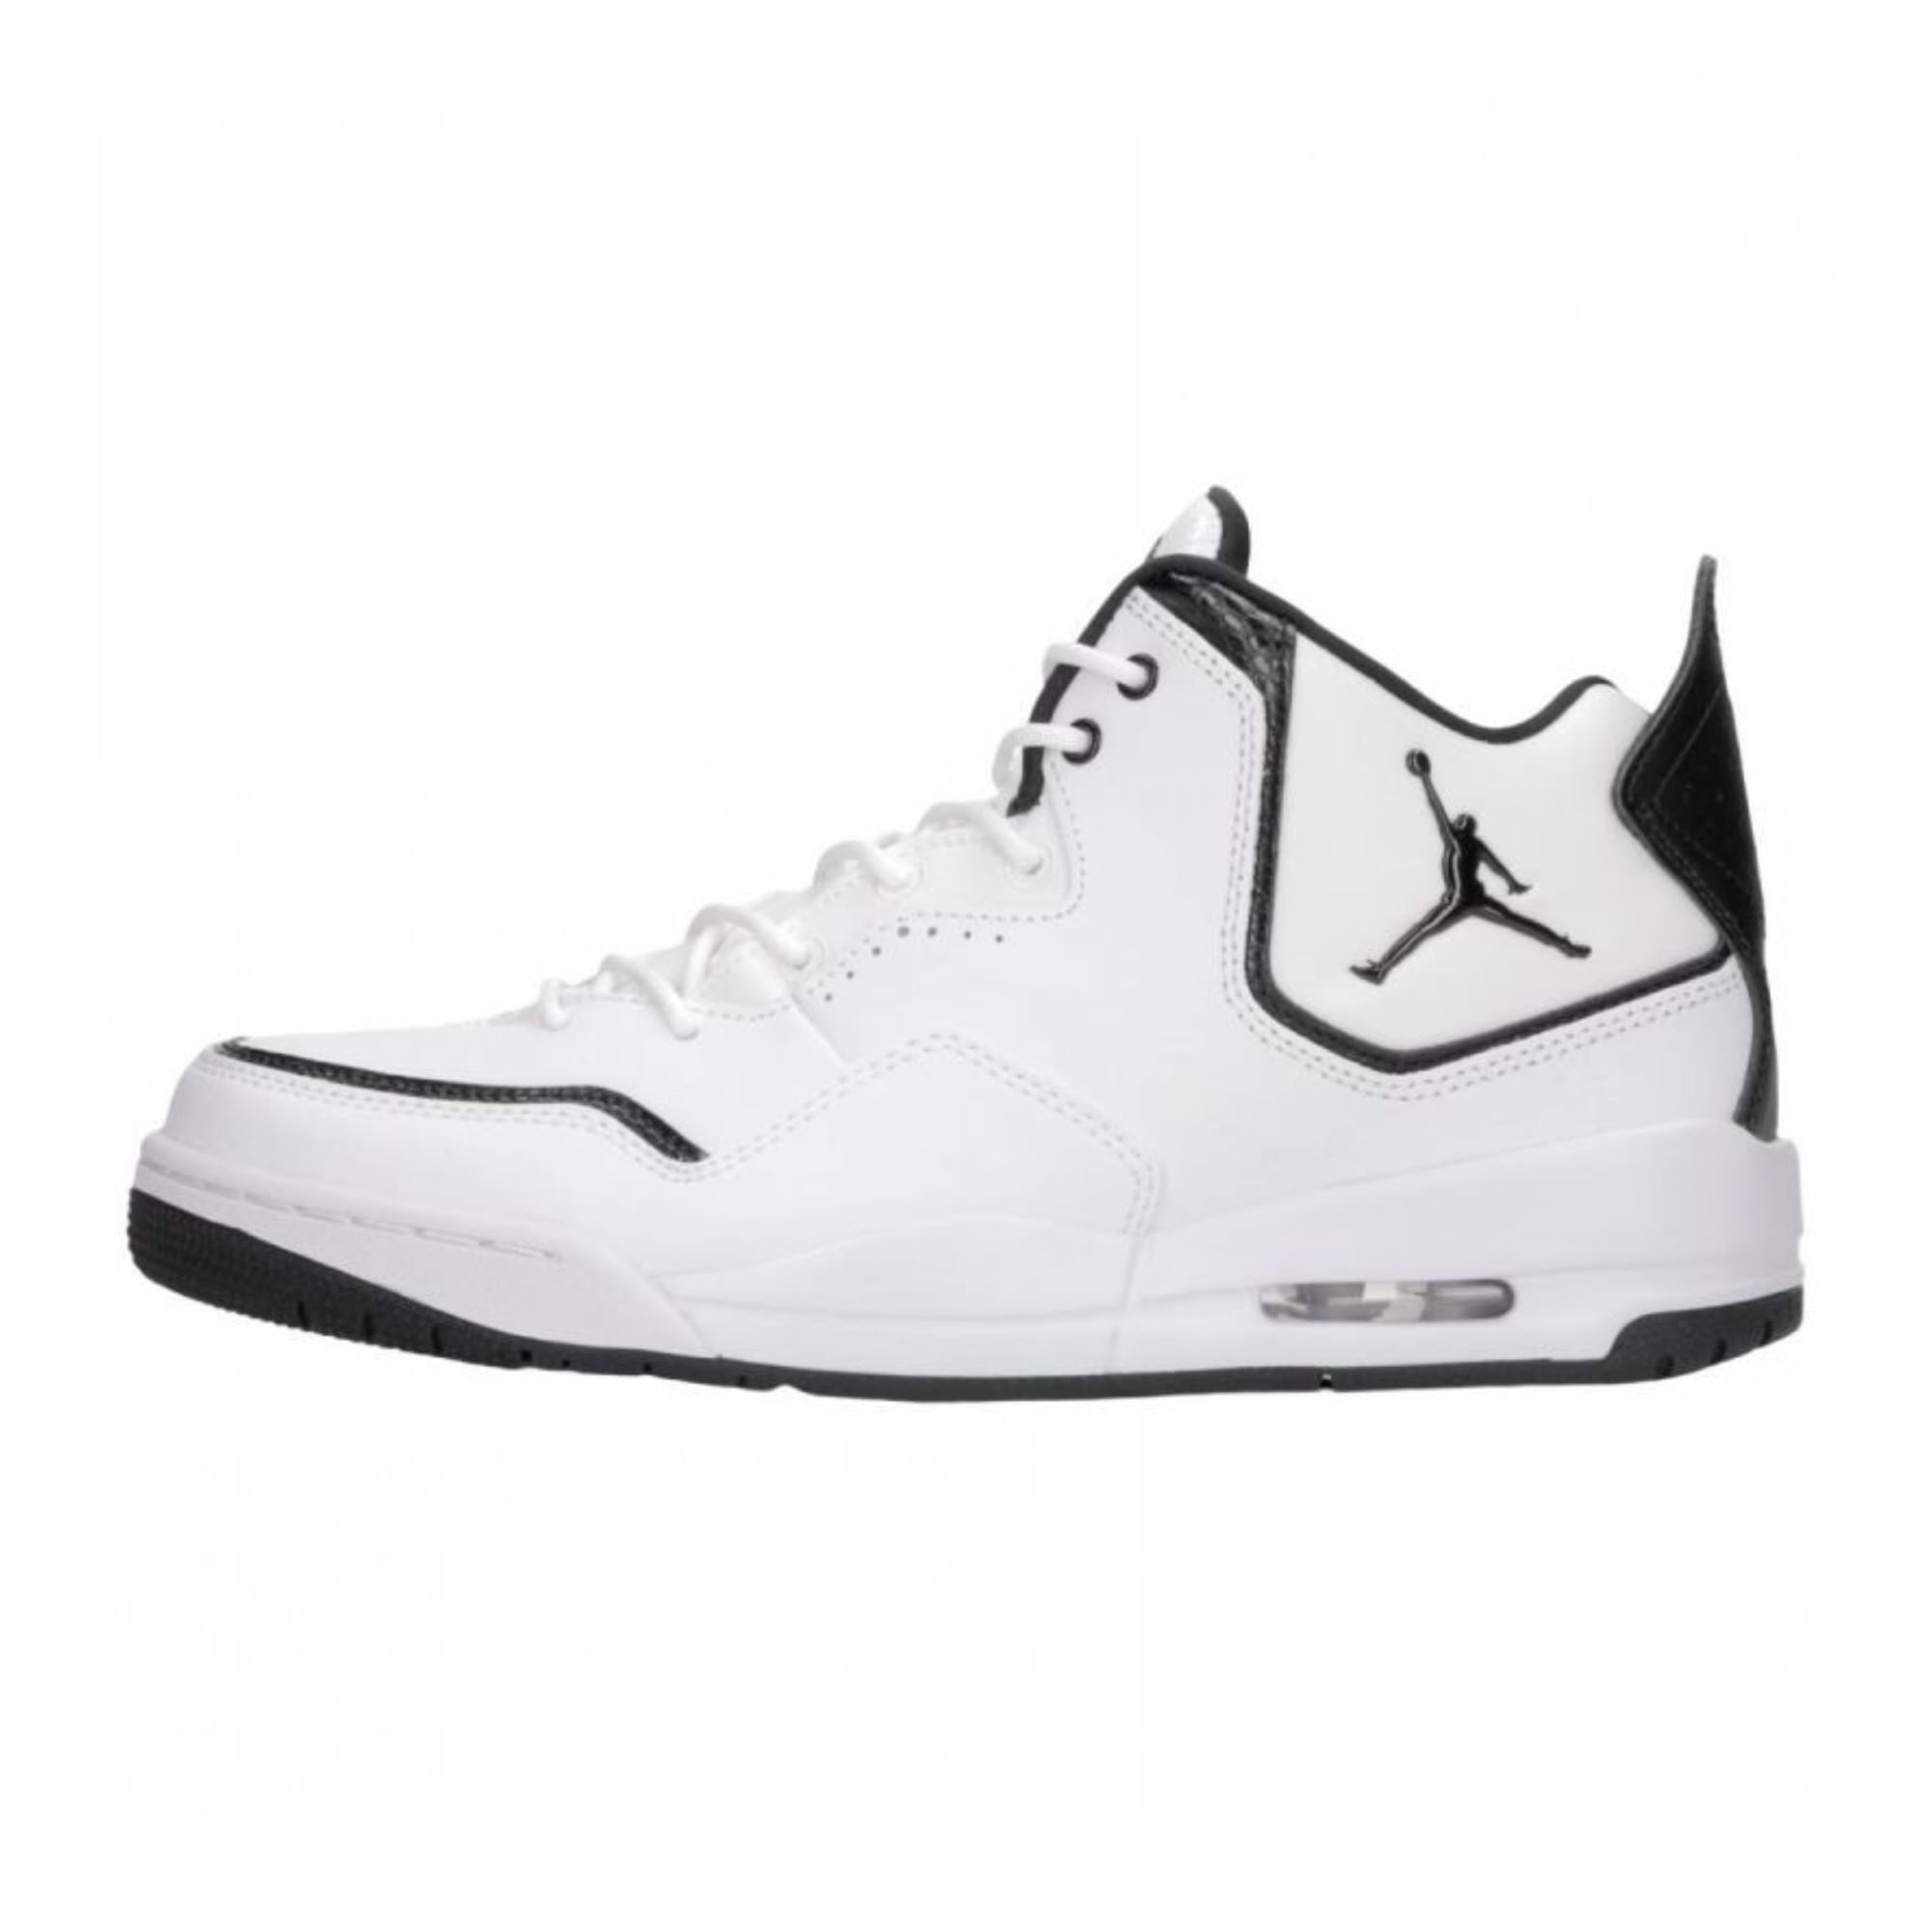 Tenis Nike Jordan Courtside 23 White Black AR1000-100